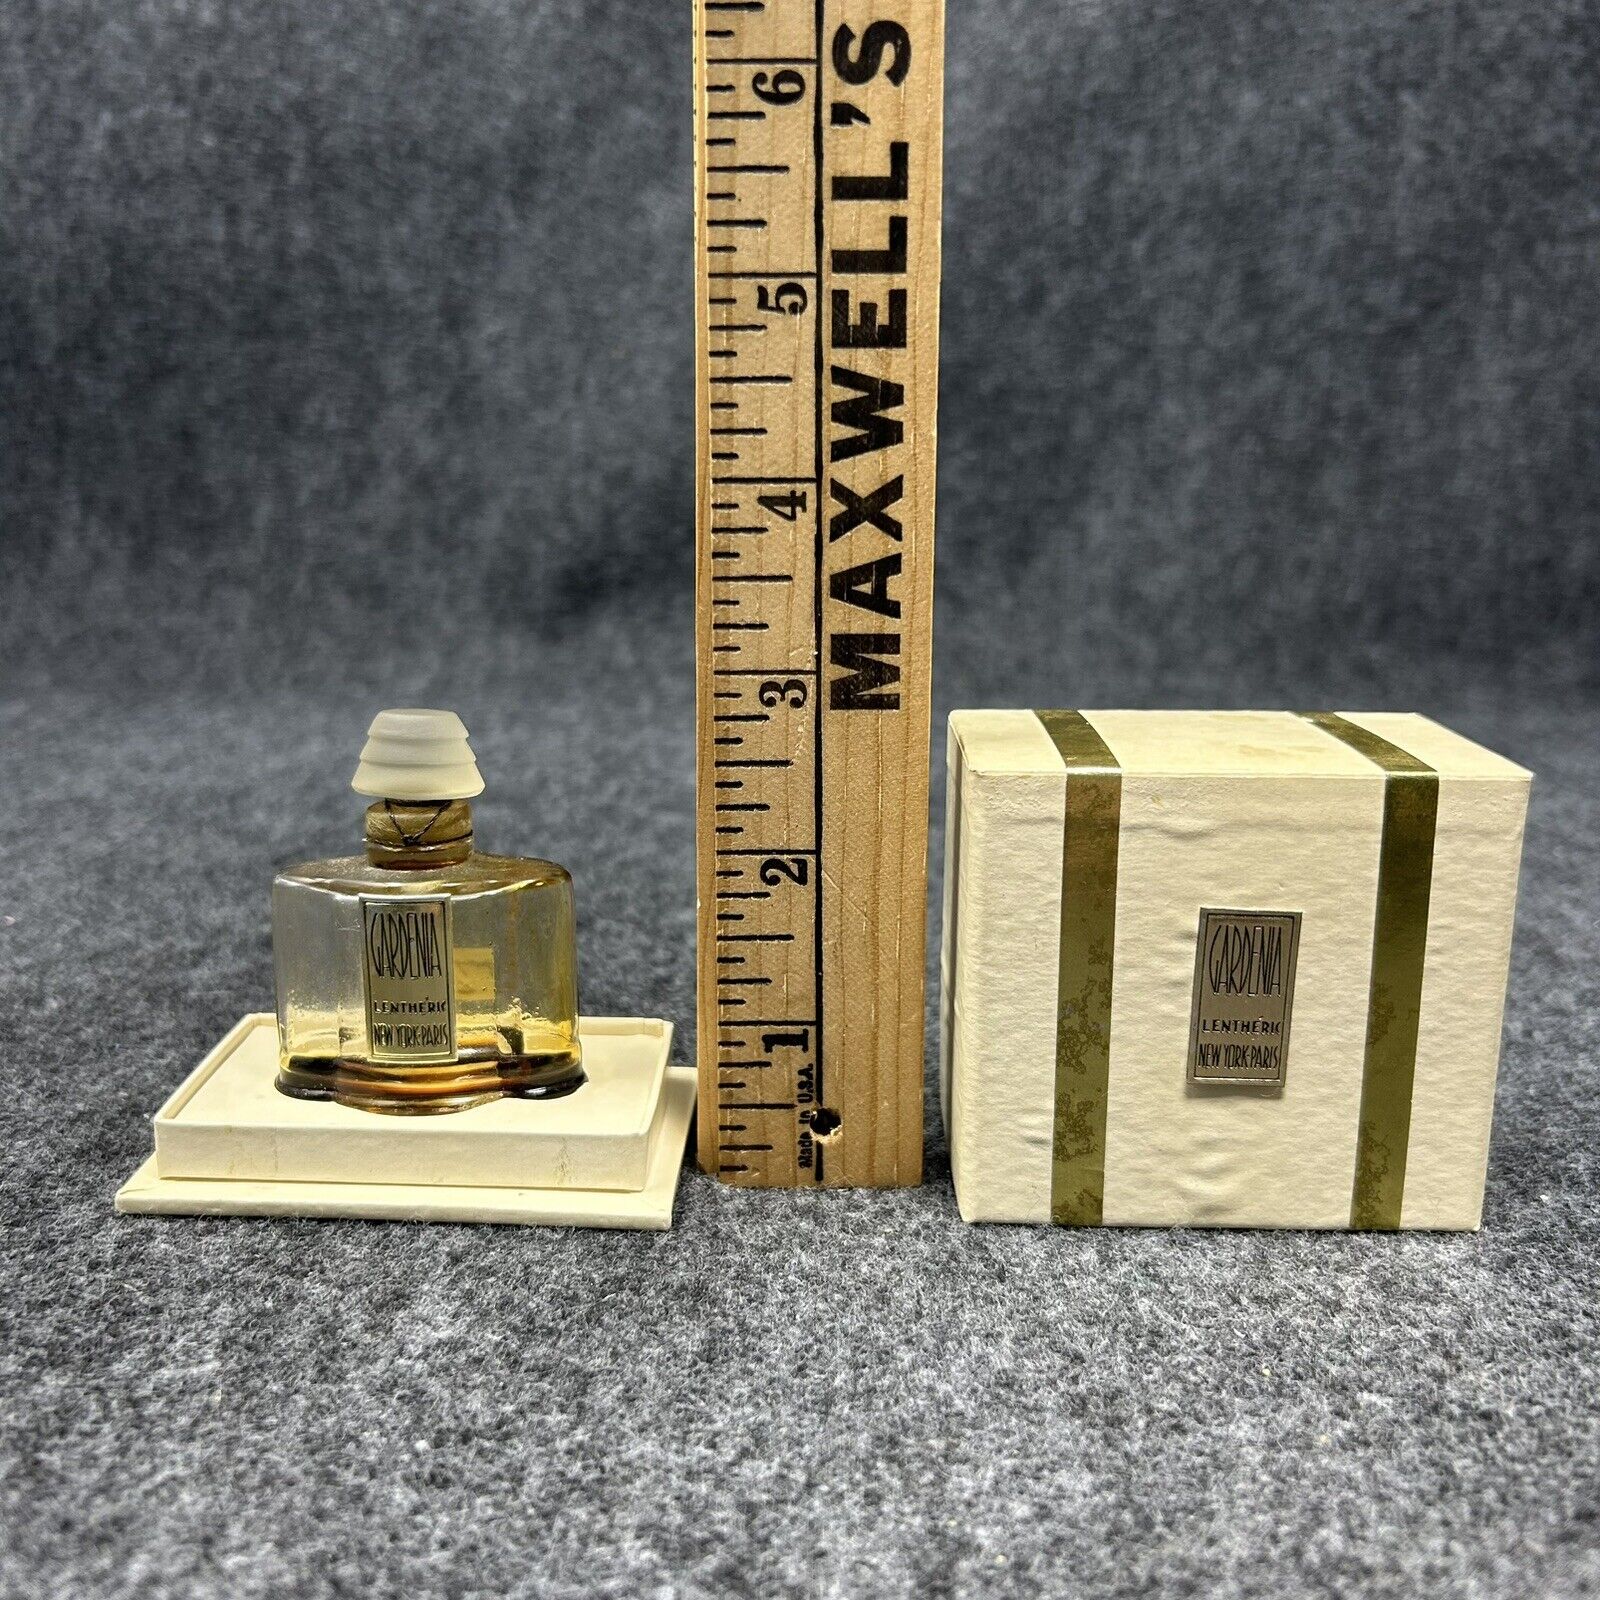 Gardenia Lentheric Vintage Perfume Bottle and Box Glass Sample Mini Vanity Decor